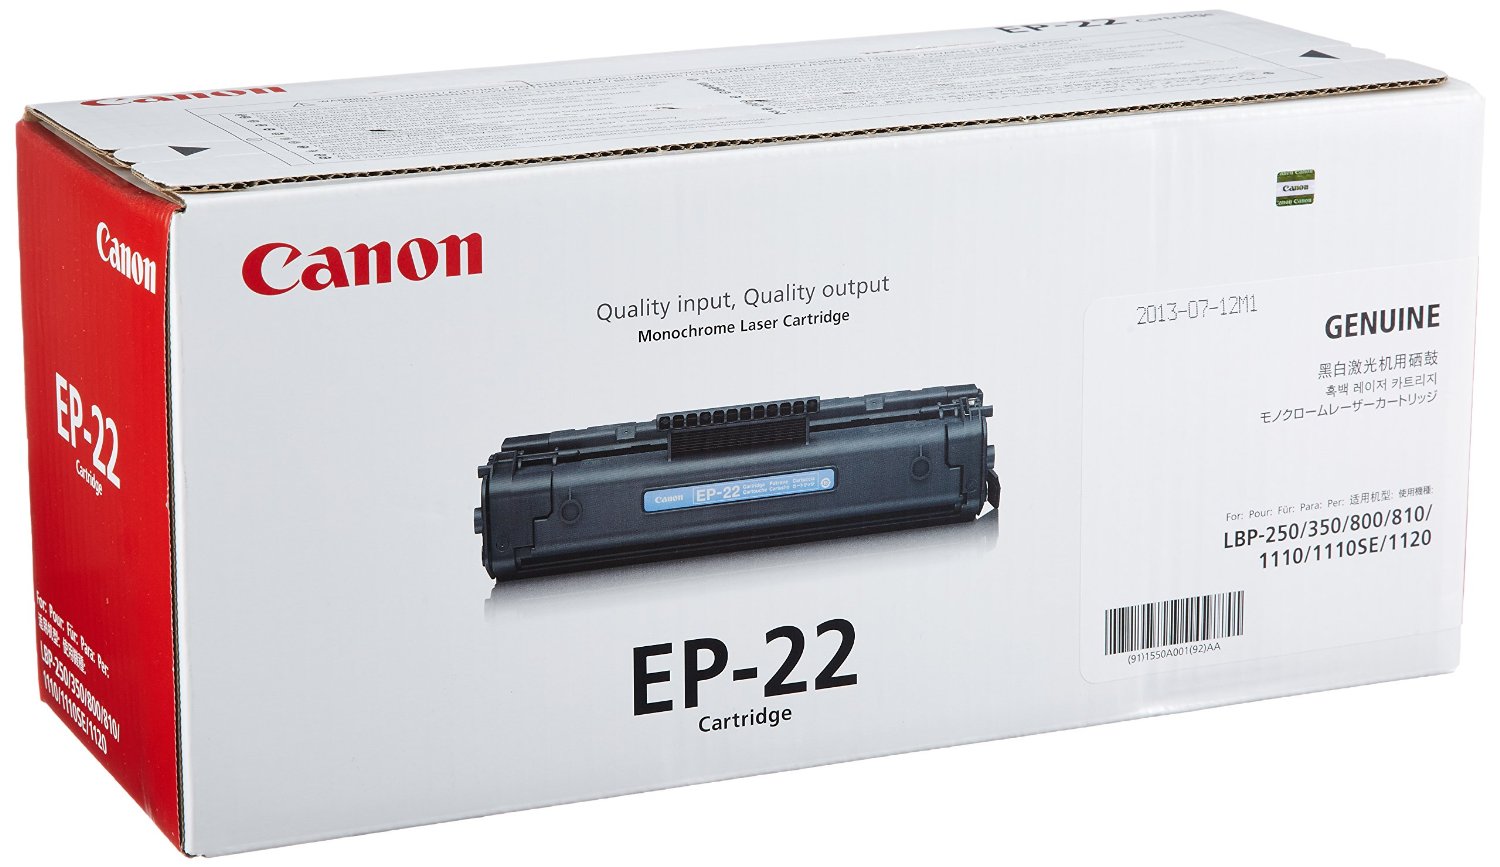 Canon toner nero EP-22 1550A003 capacit